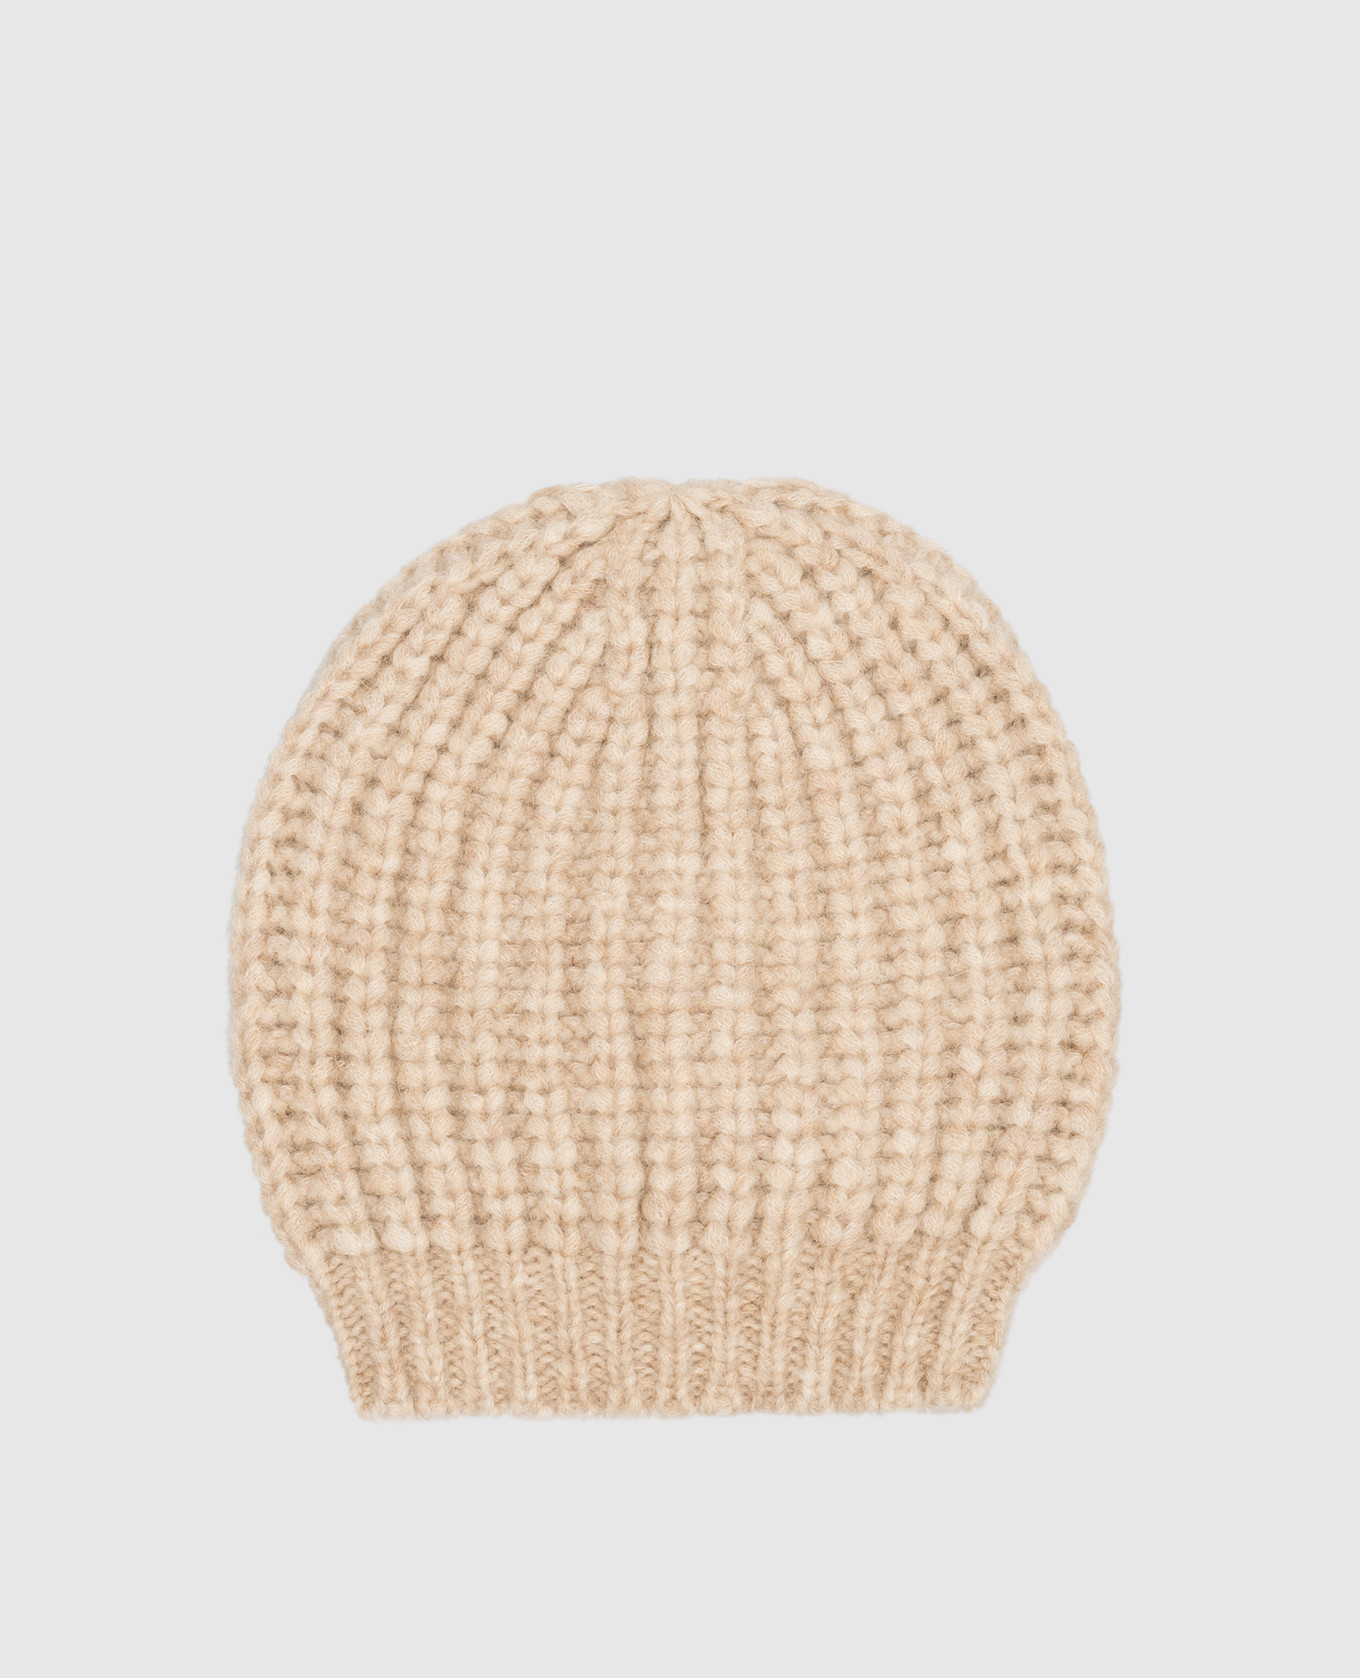 Beige cap in a textured pattern